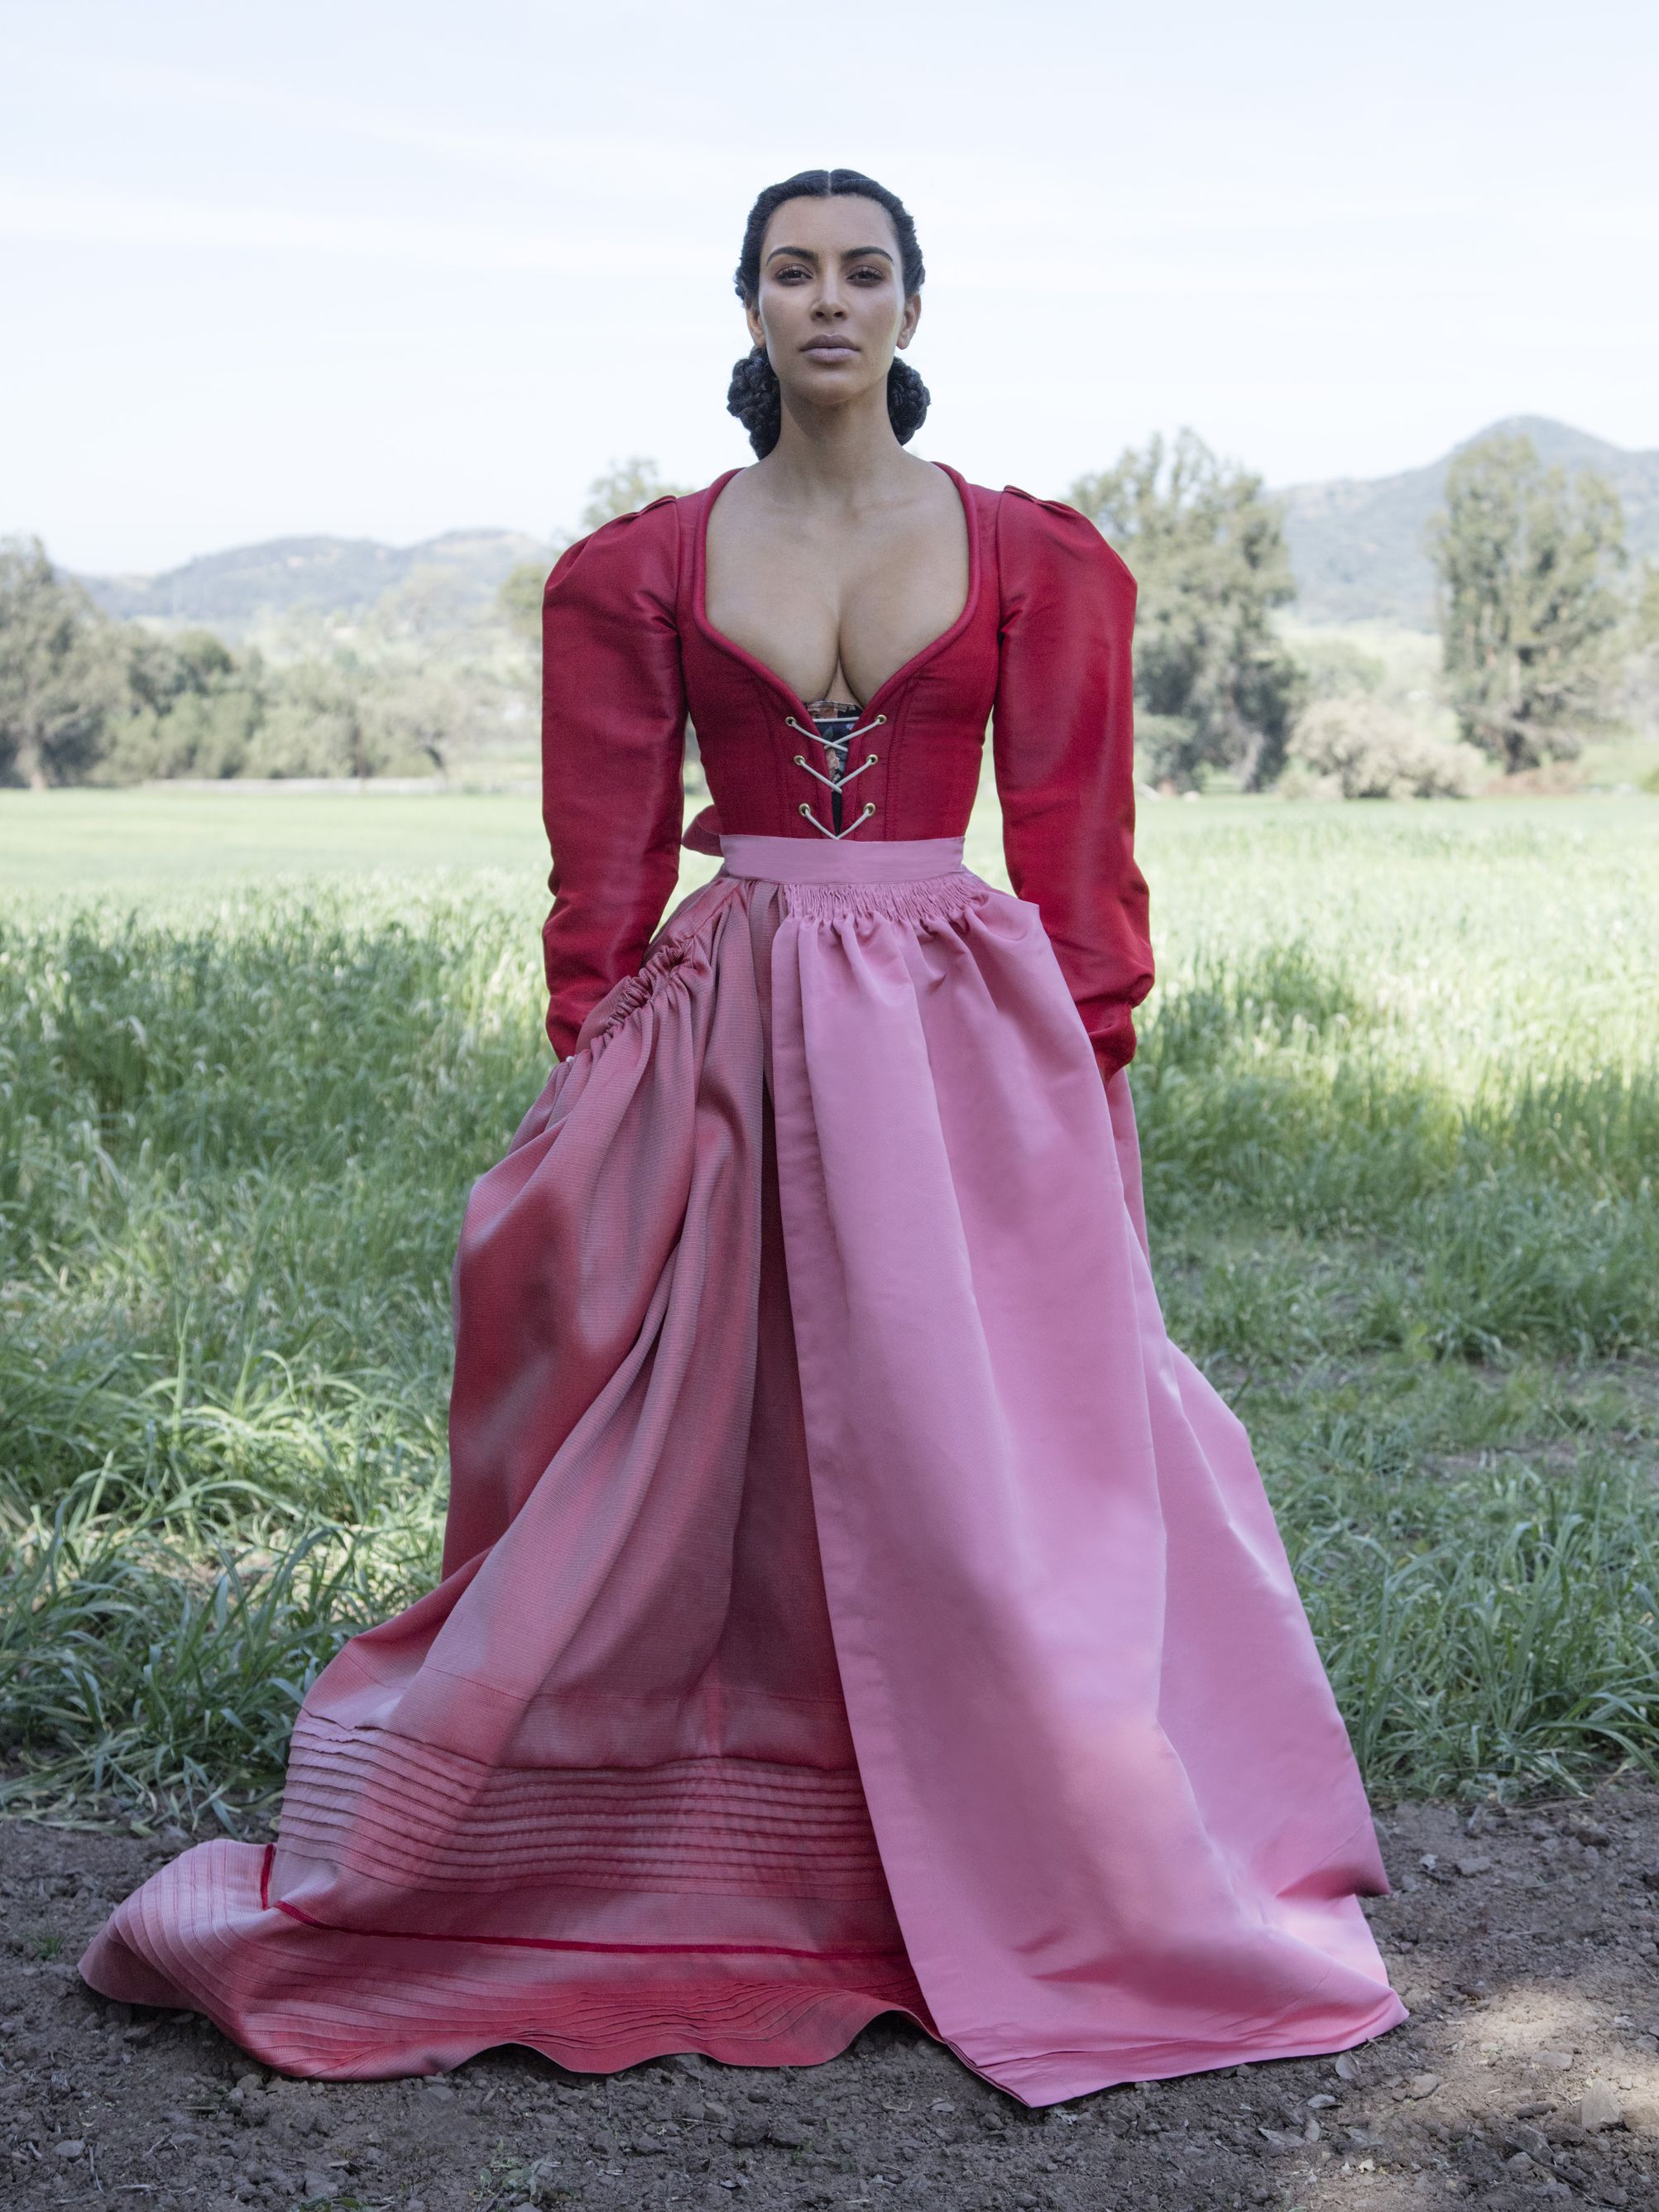 Kim Kardashian West by Jackie Nickerson for CR Fashion Book 13 (5).jpg